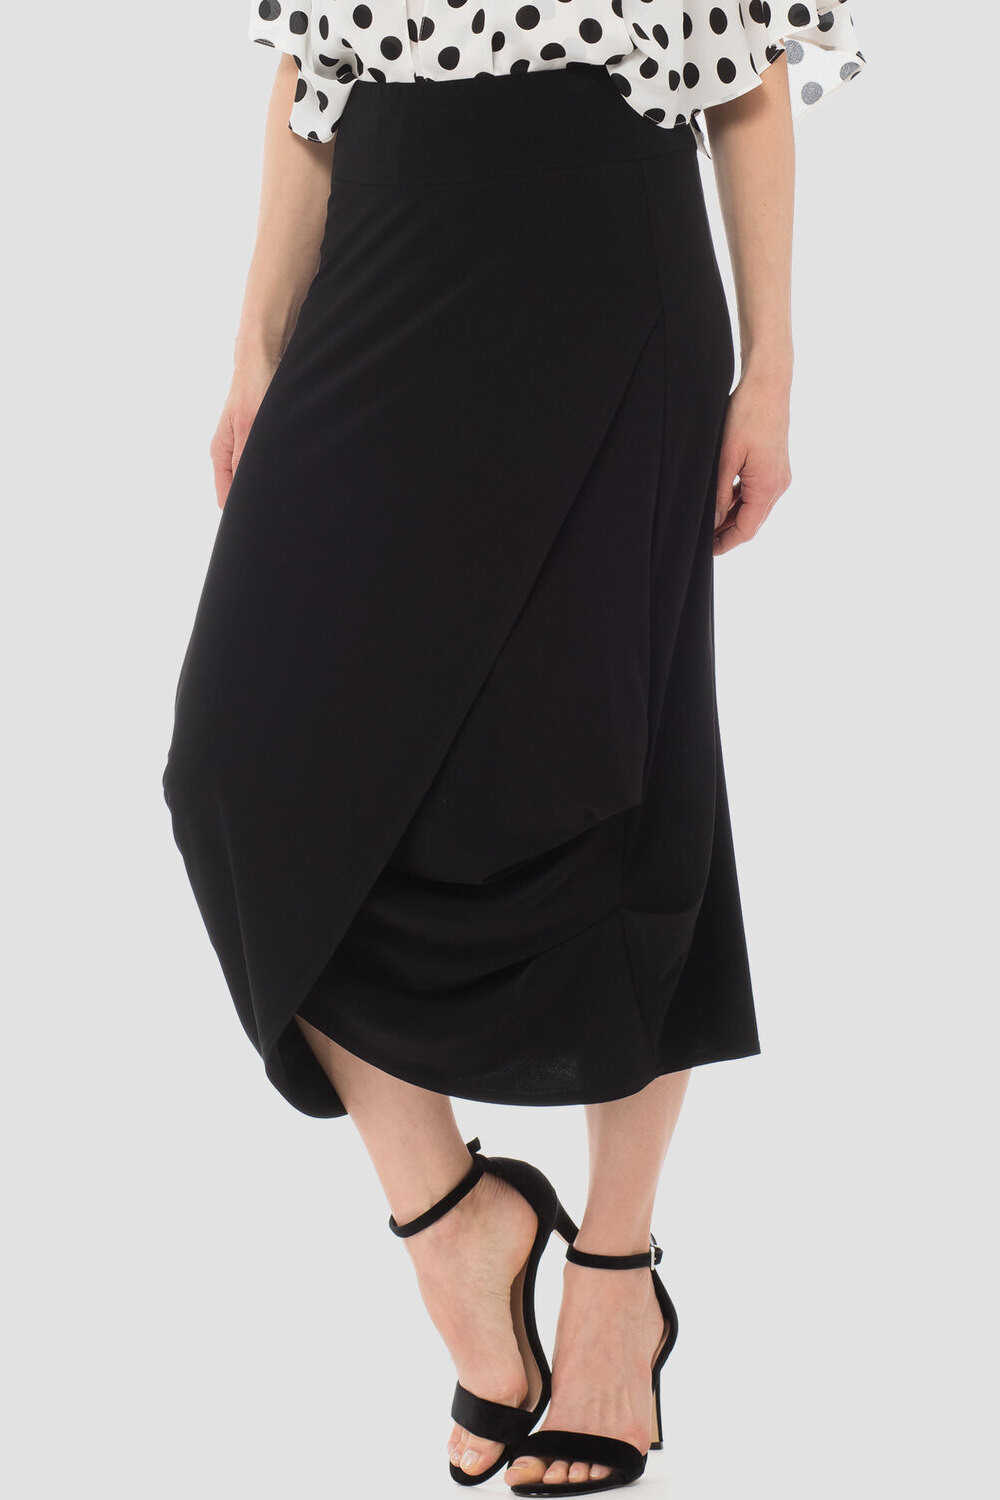 Joseph Ribkoff skirt style 183241. Black